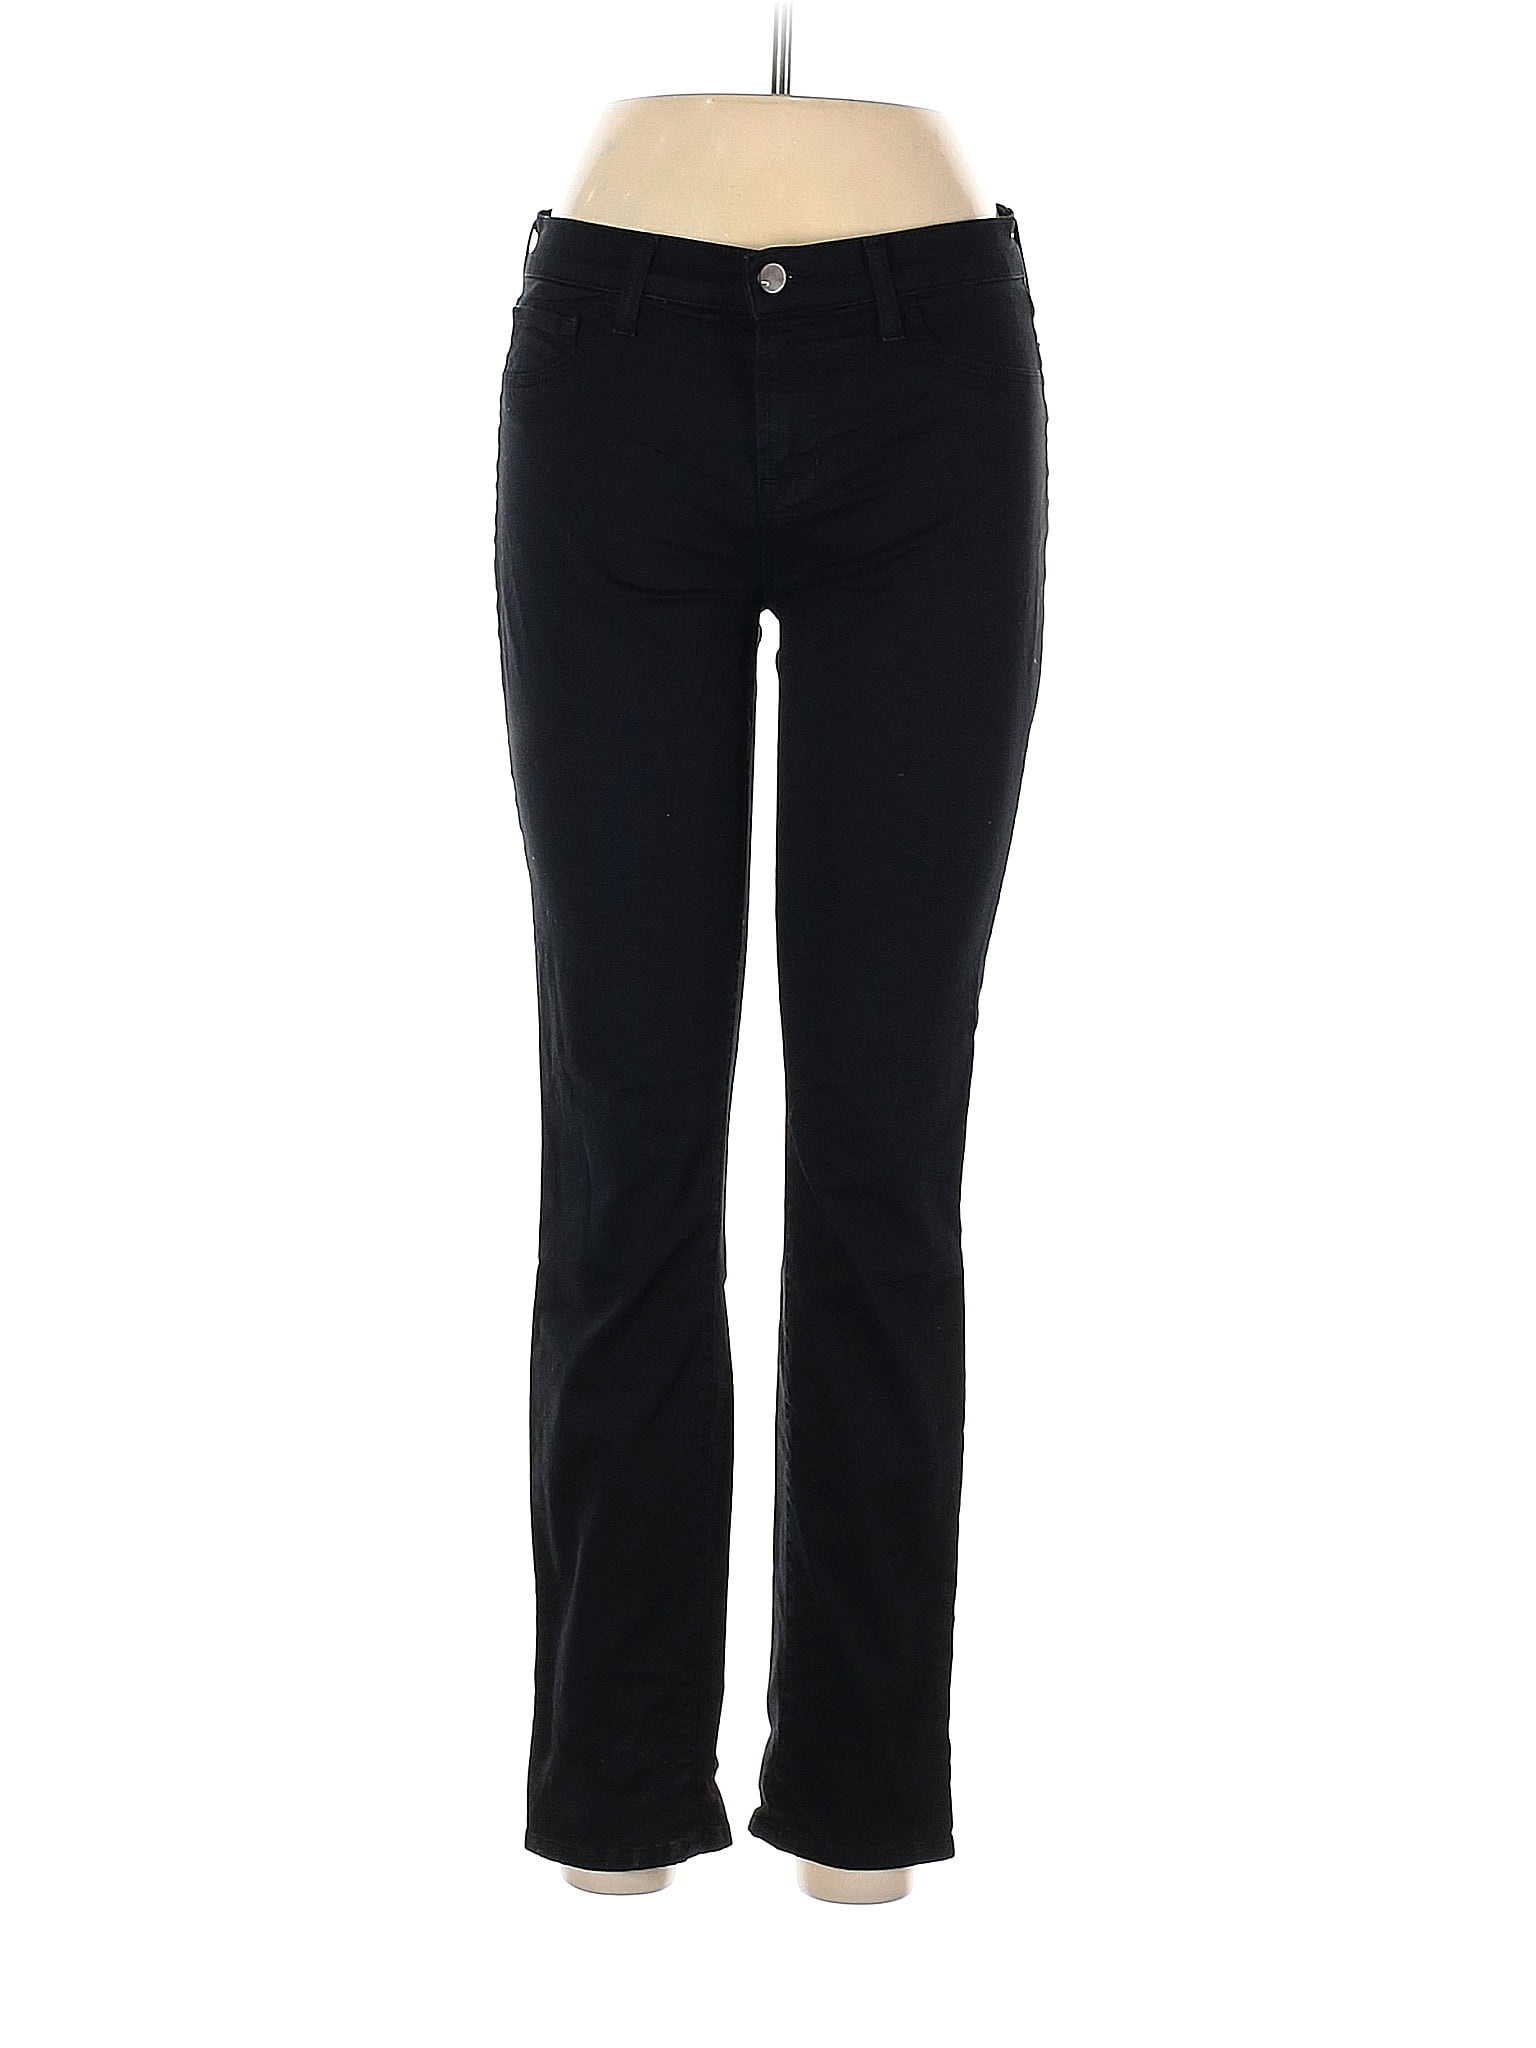 J Brand Black Casual Pants 28 Waist - 85% off | thredUP